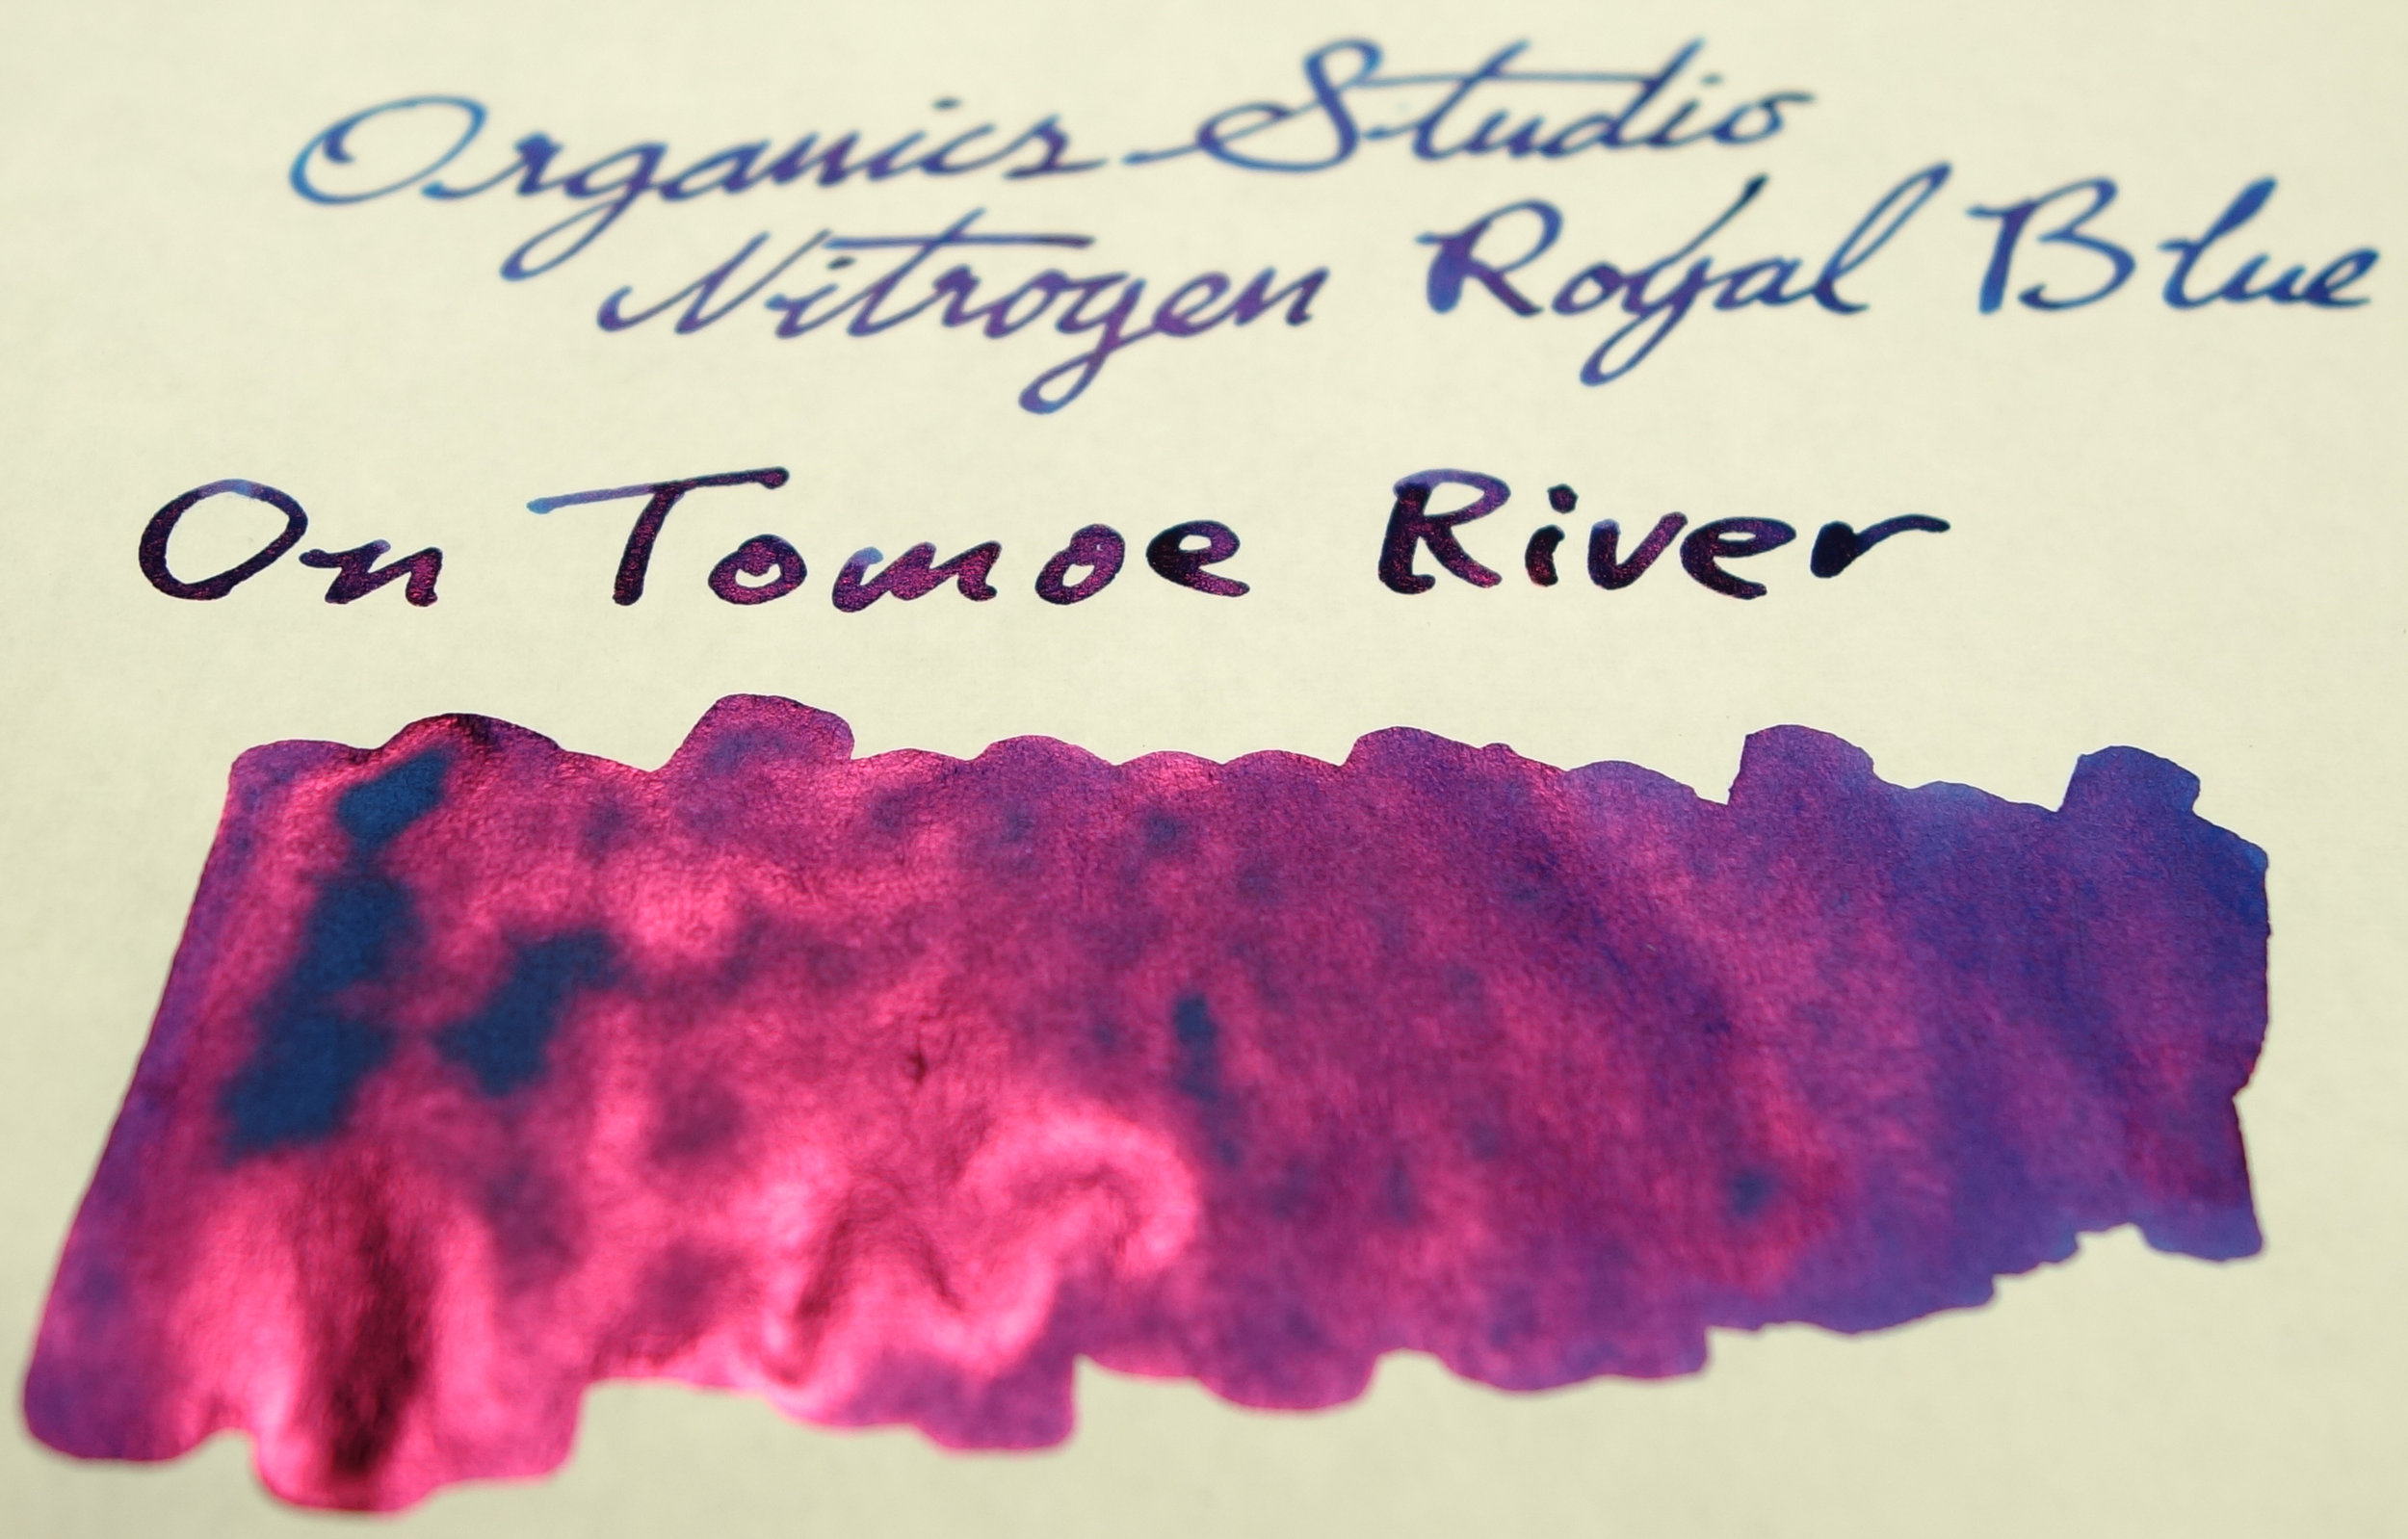 Ink Review: Organics Studio Nitrogen Royal Blue — Macchiato Man